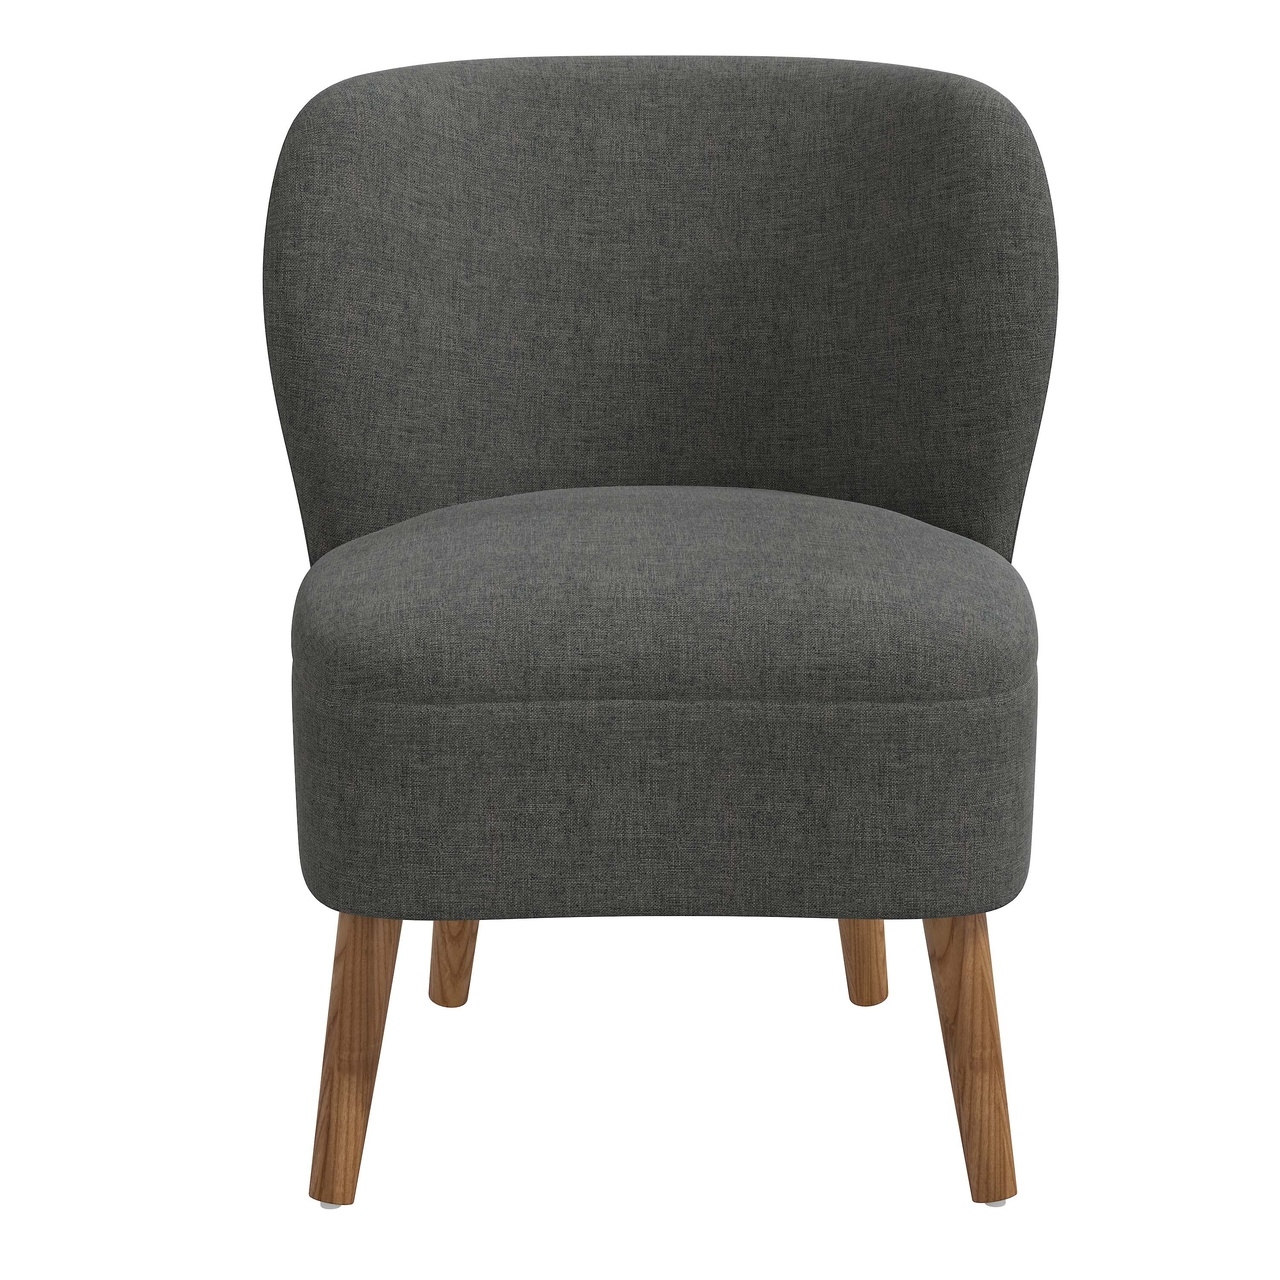 Lara Chair - Image 1